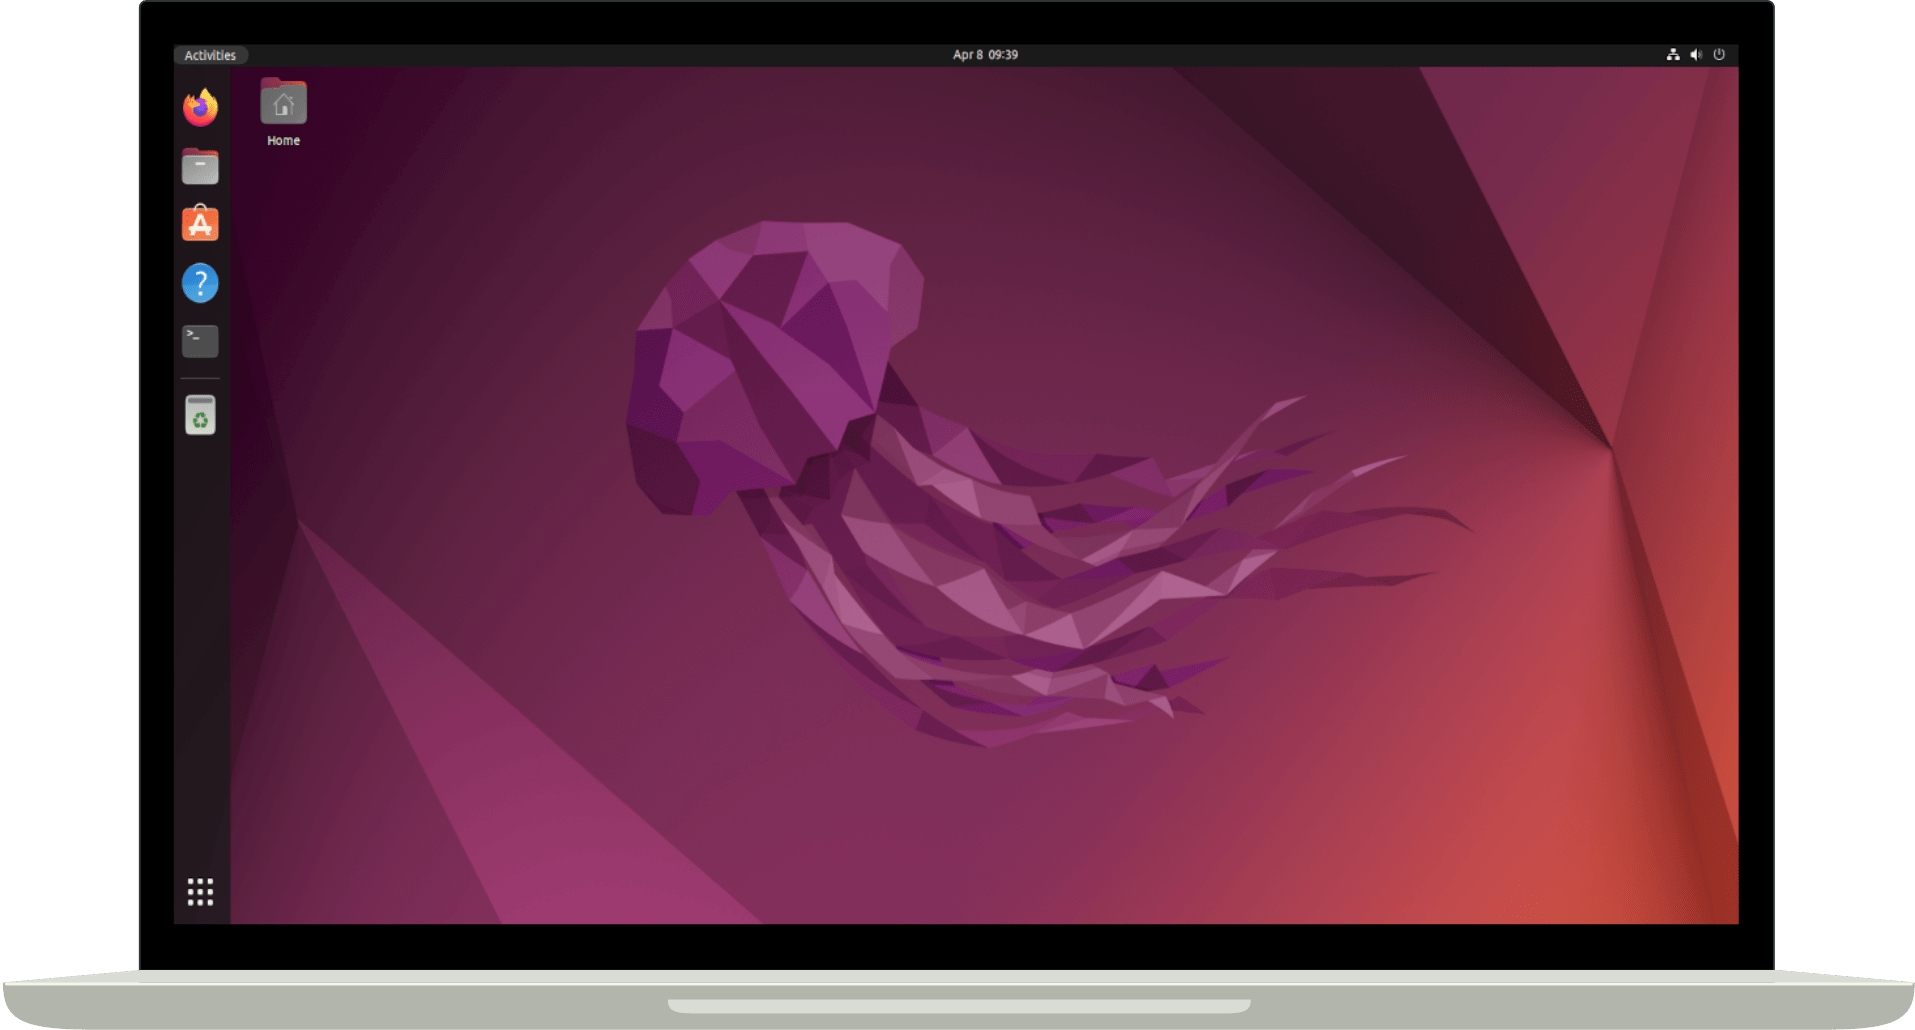 Ubuntu desktop environments